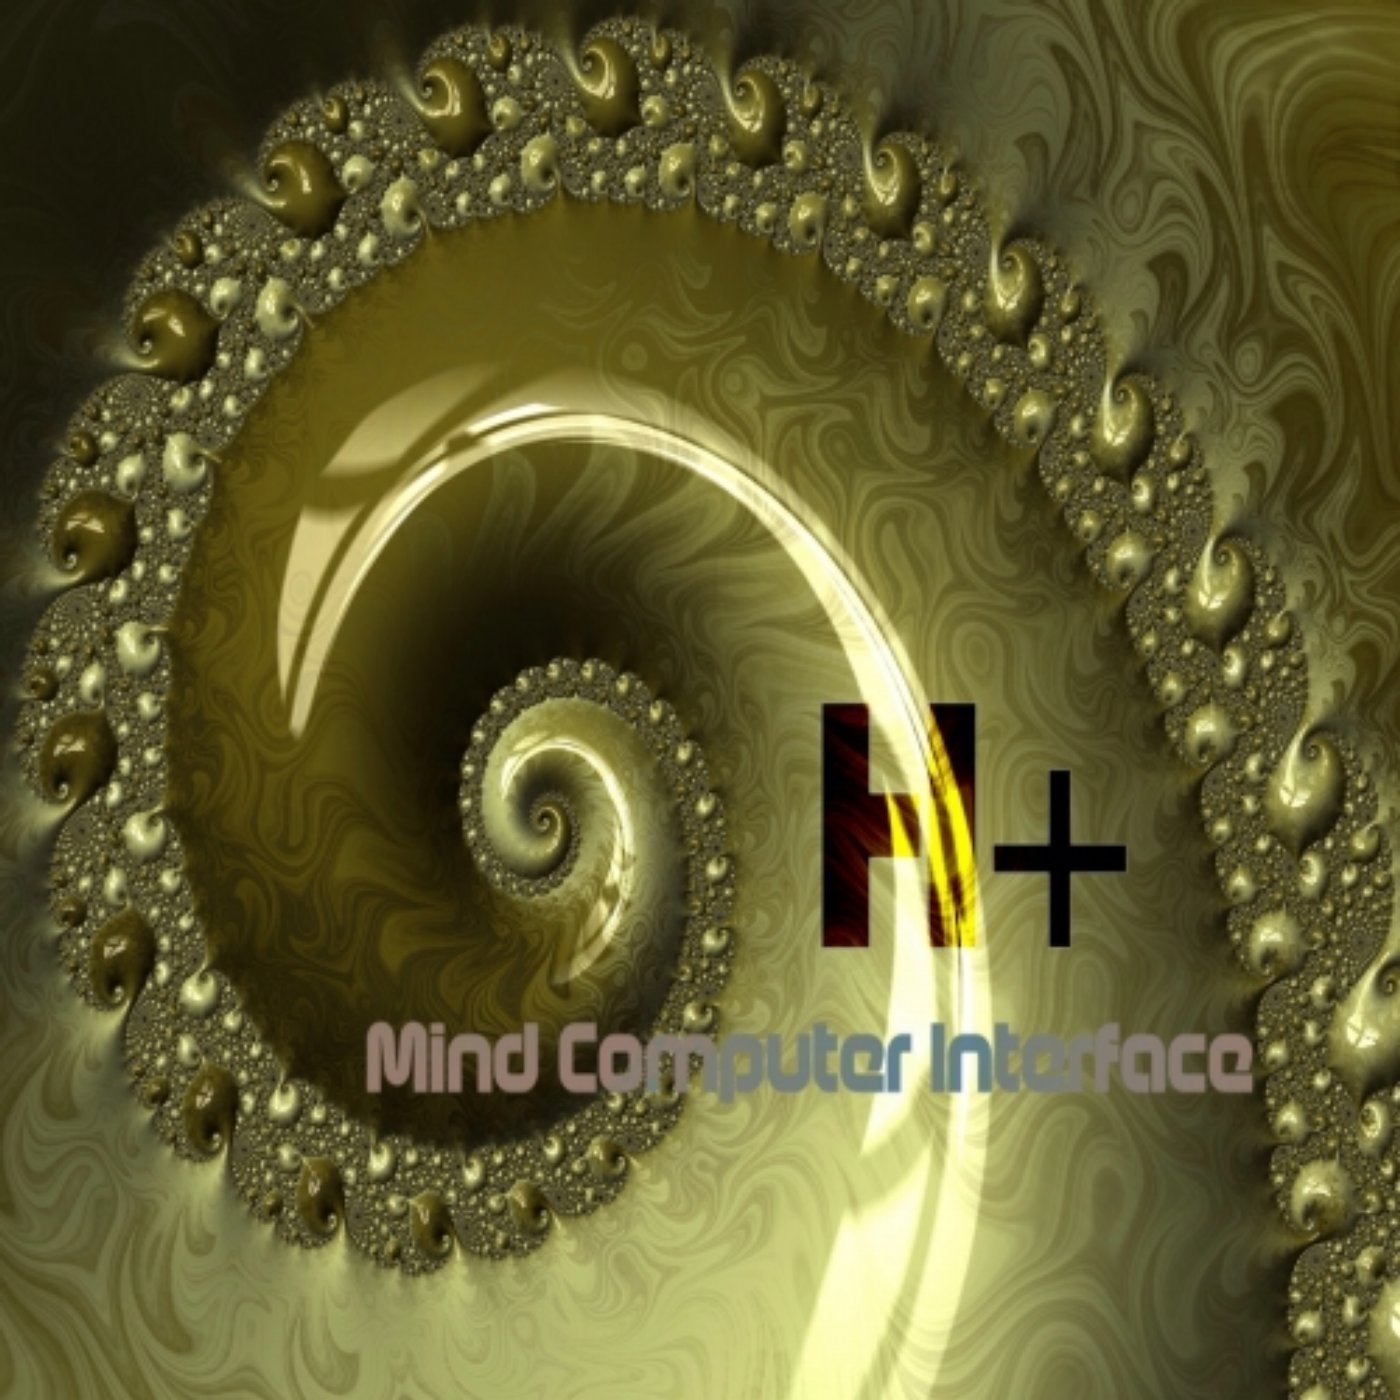 Mind Computer Interface